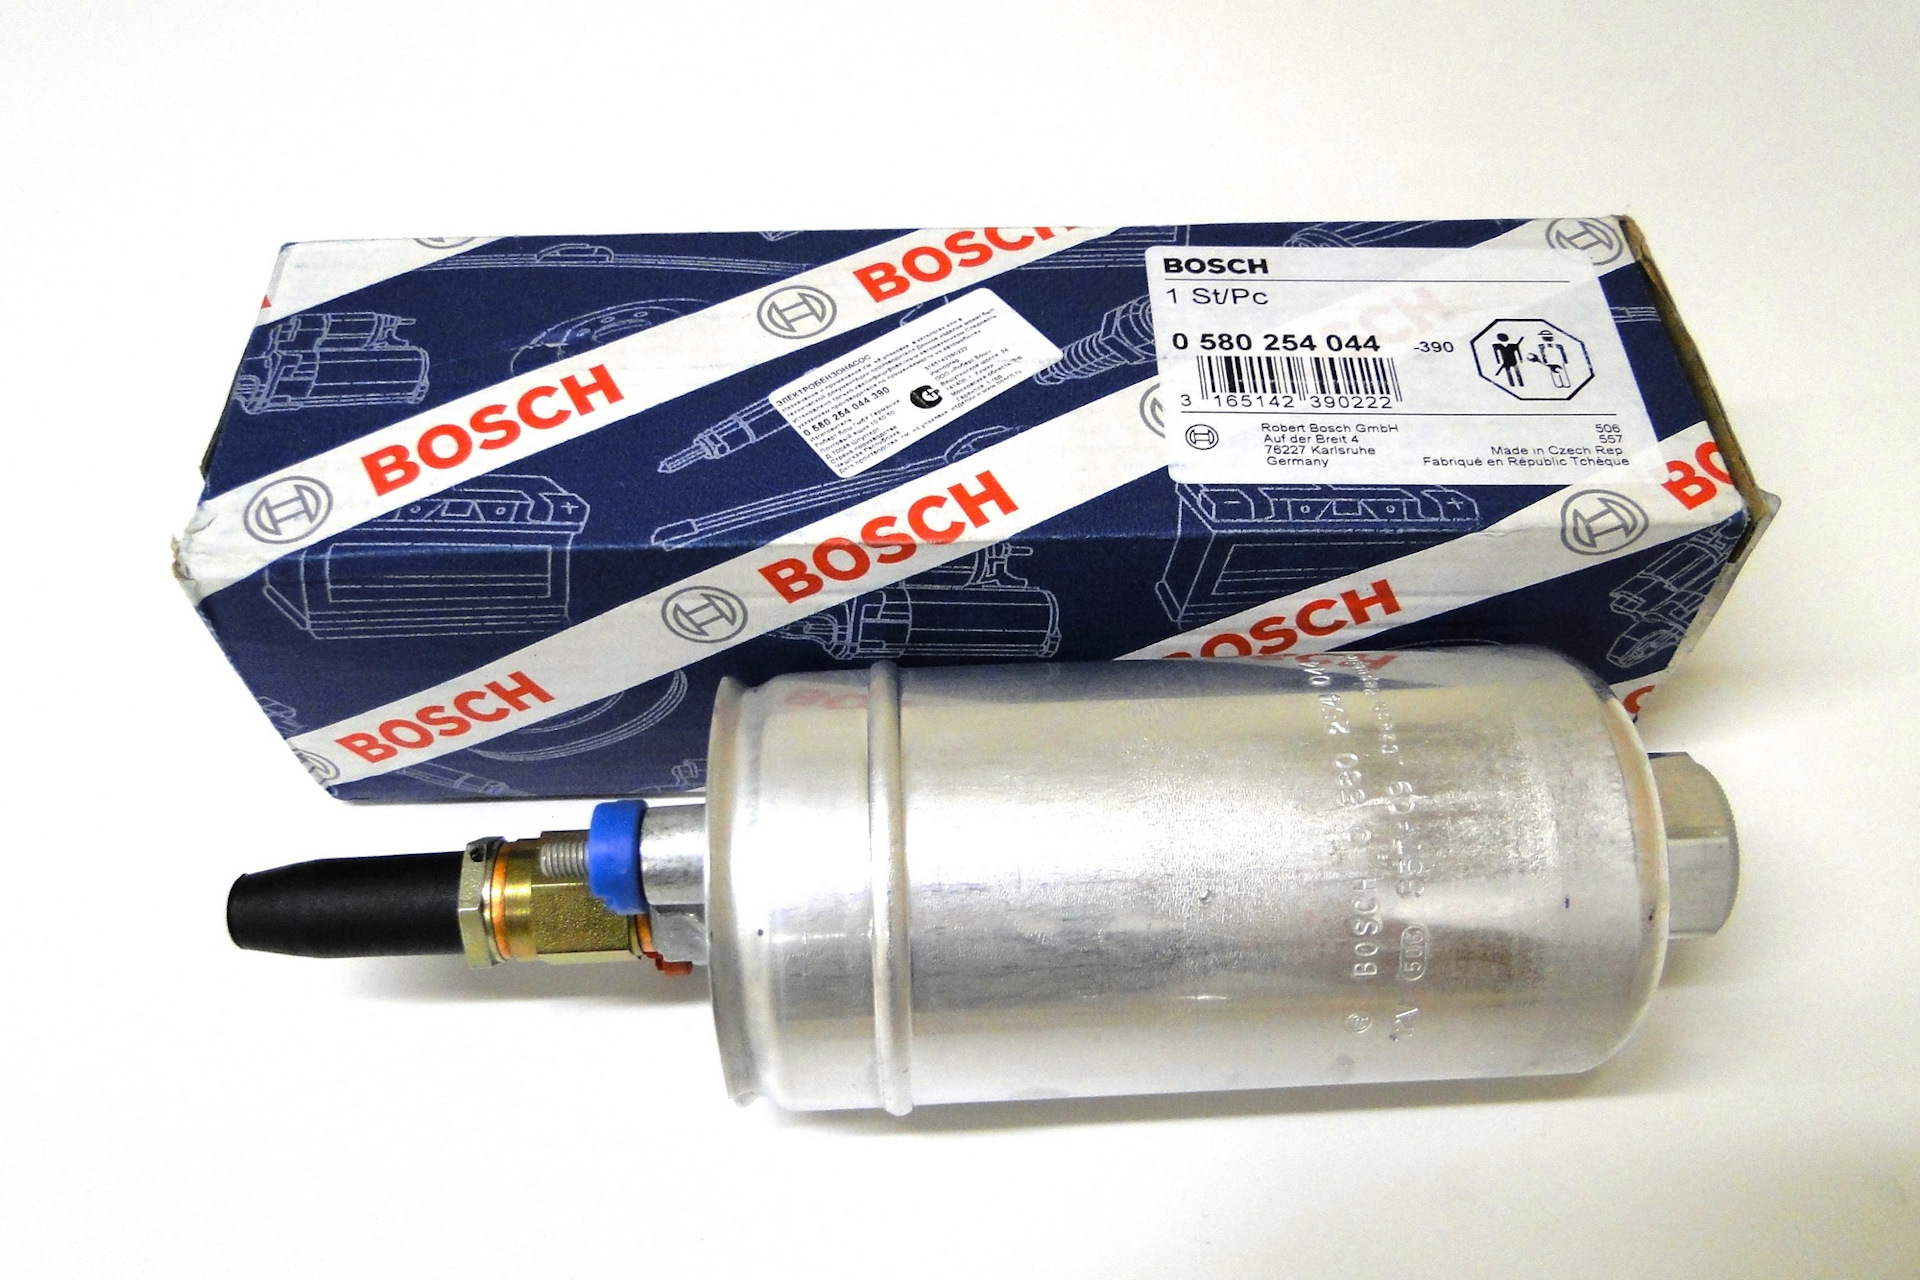 slap new Zealand reservoir Топливный насос Bosch 044 (300 литров в час) — BMW Z3, 3.2 л., 2000 года на  DRIVE2